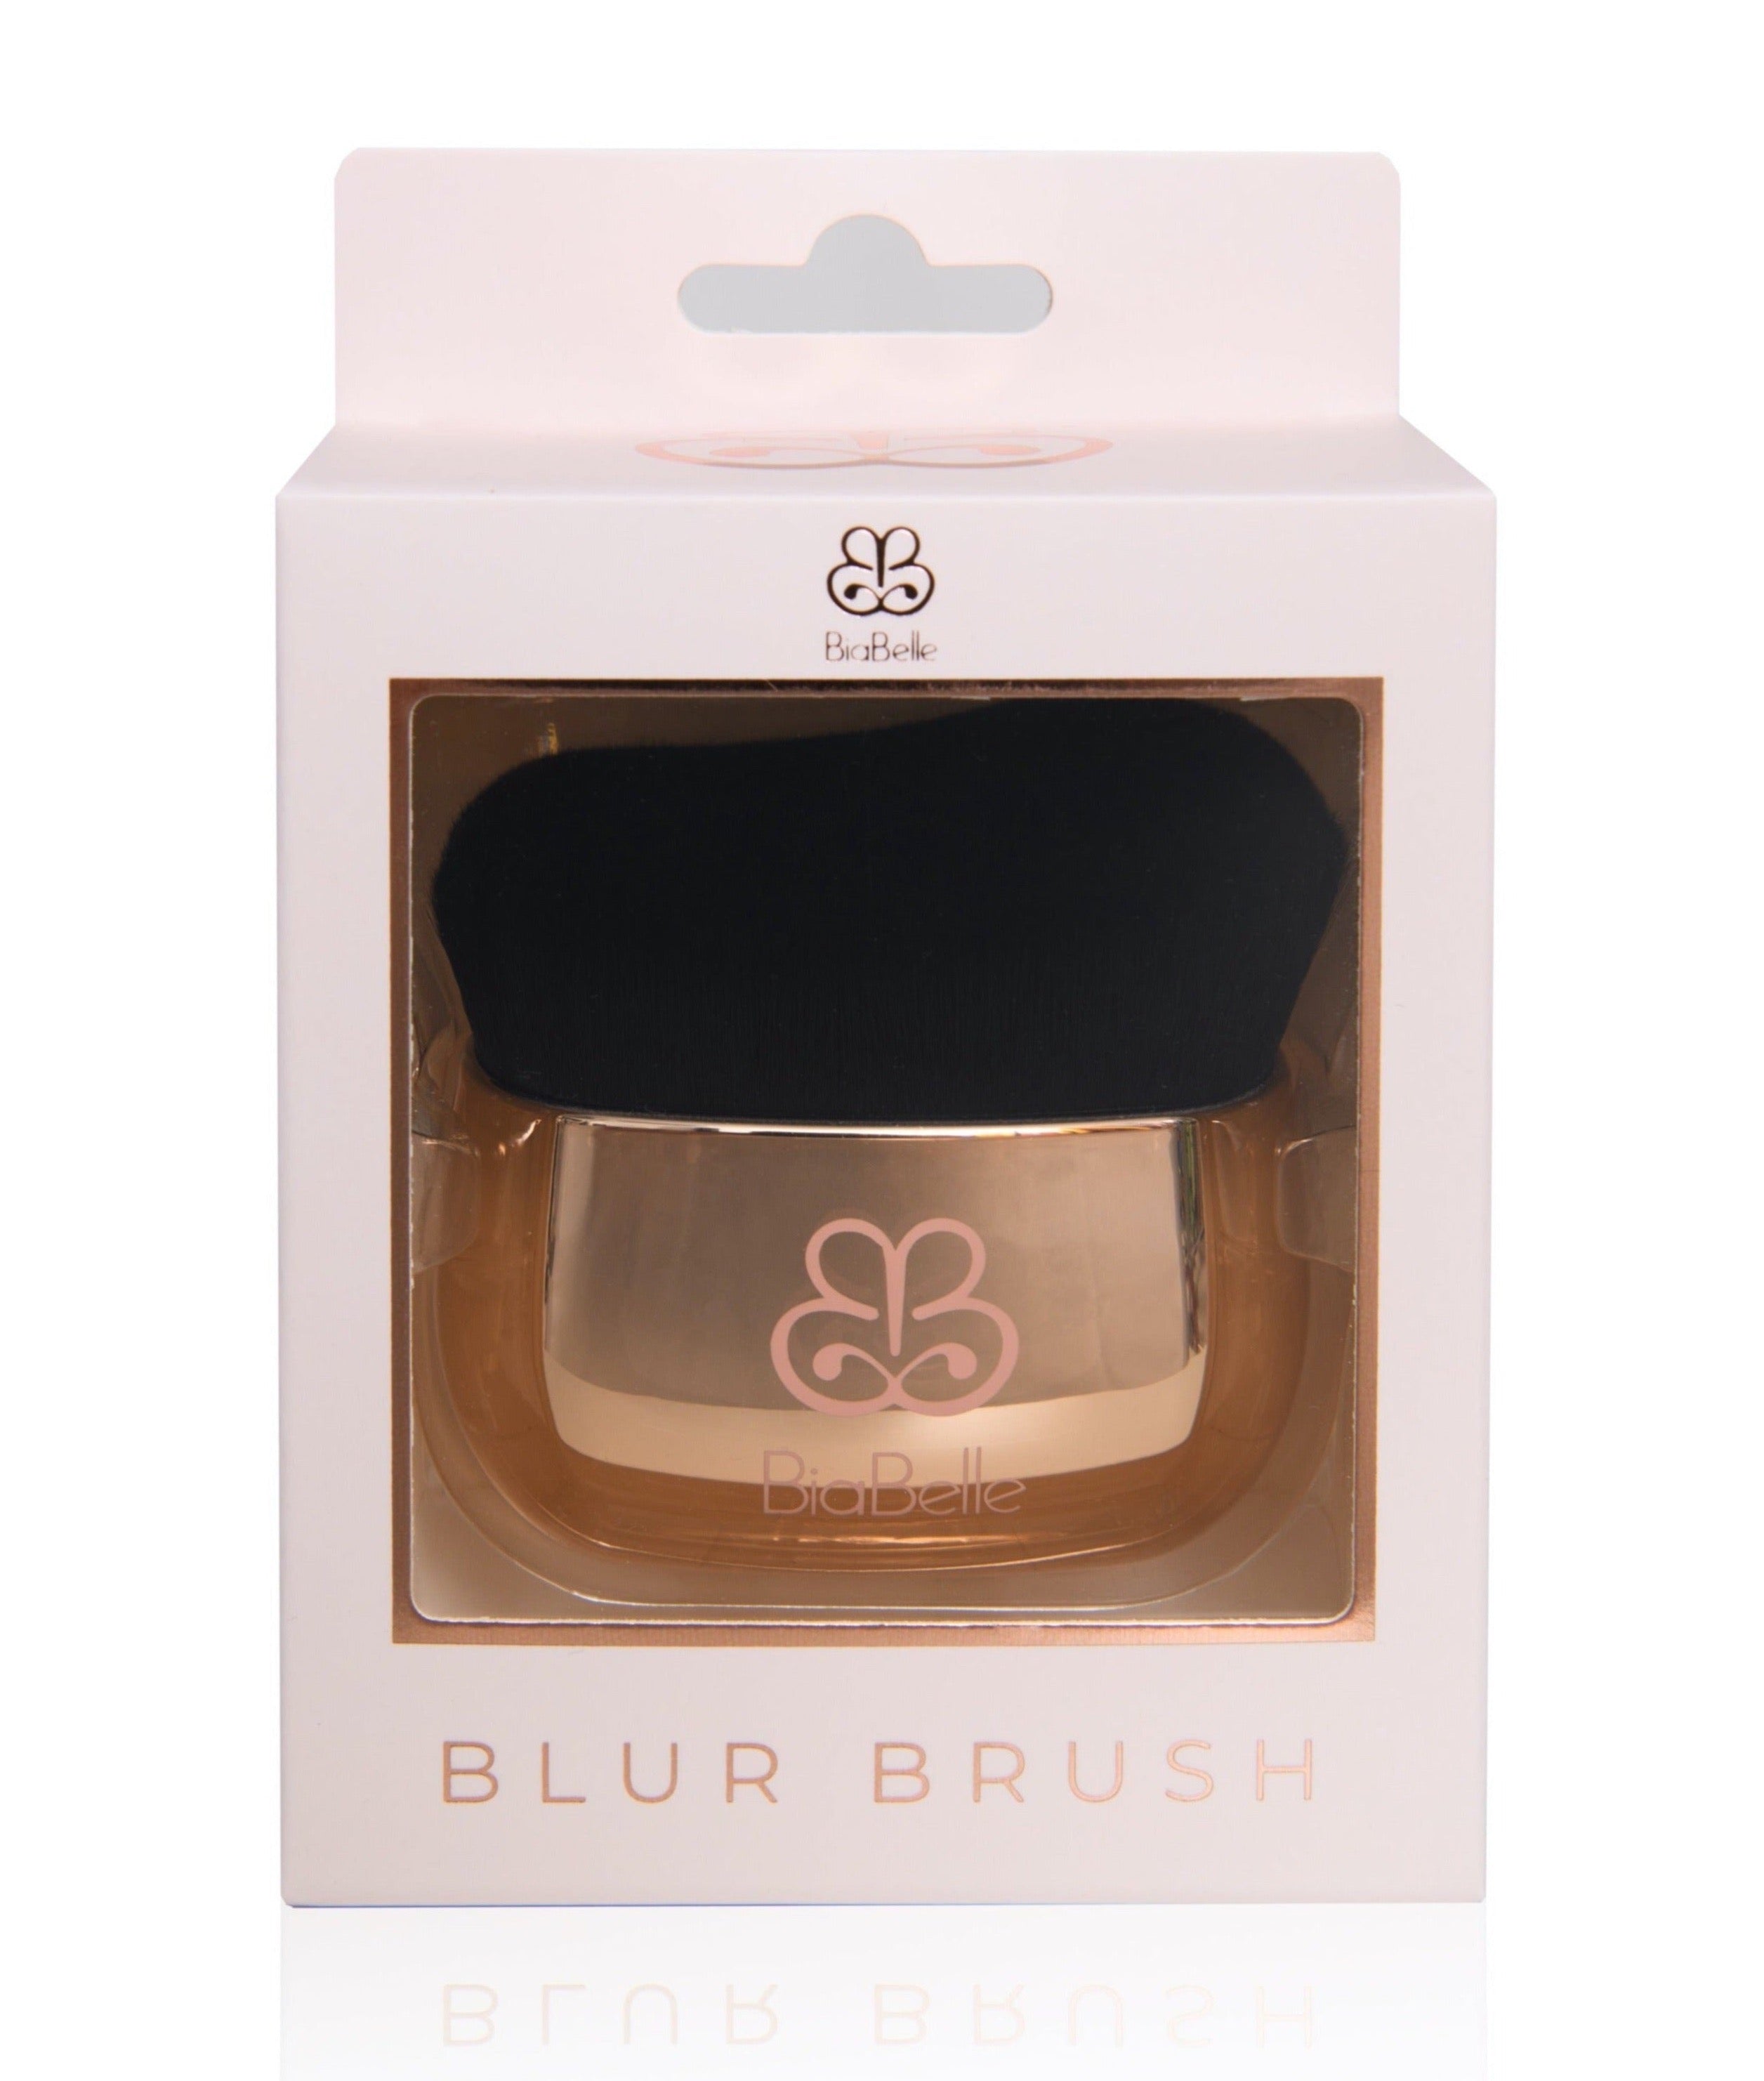 The Blur Brush